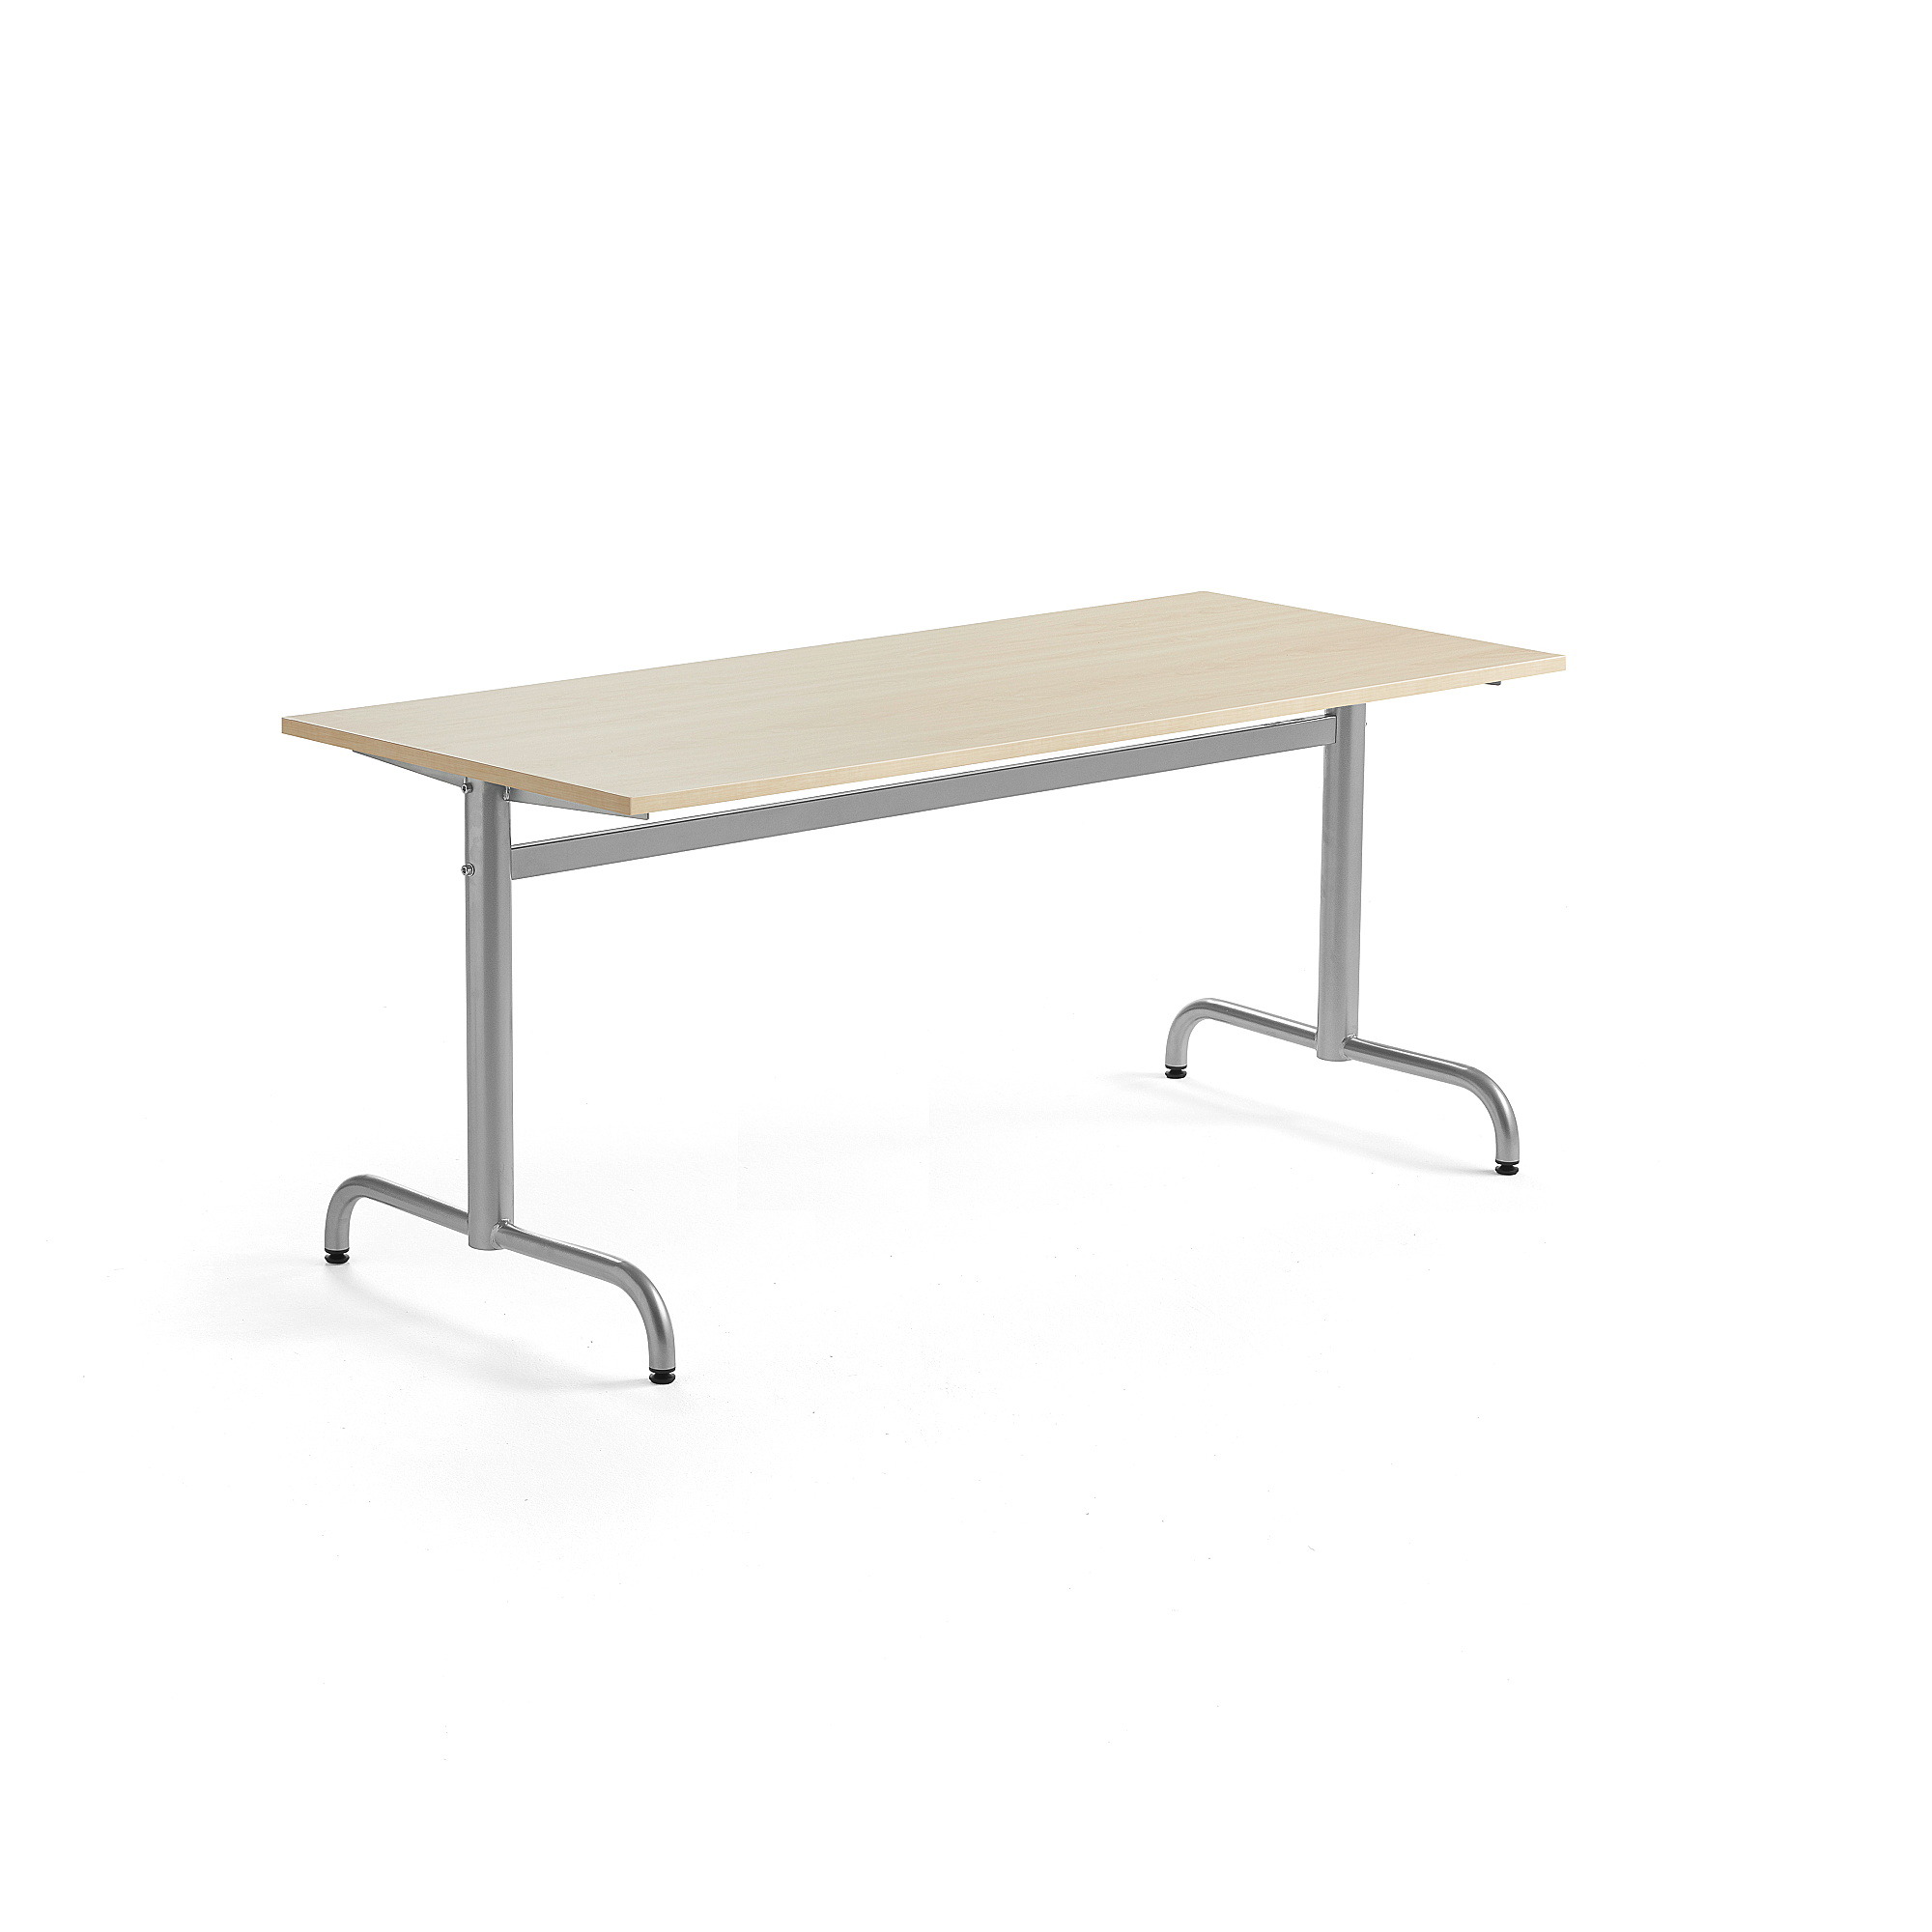 Stůl PLURAL, 1600x700x600 mm, akustická HPL deska, bříza, stříbrná